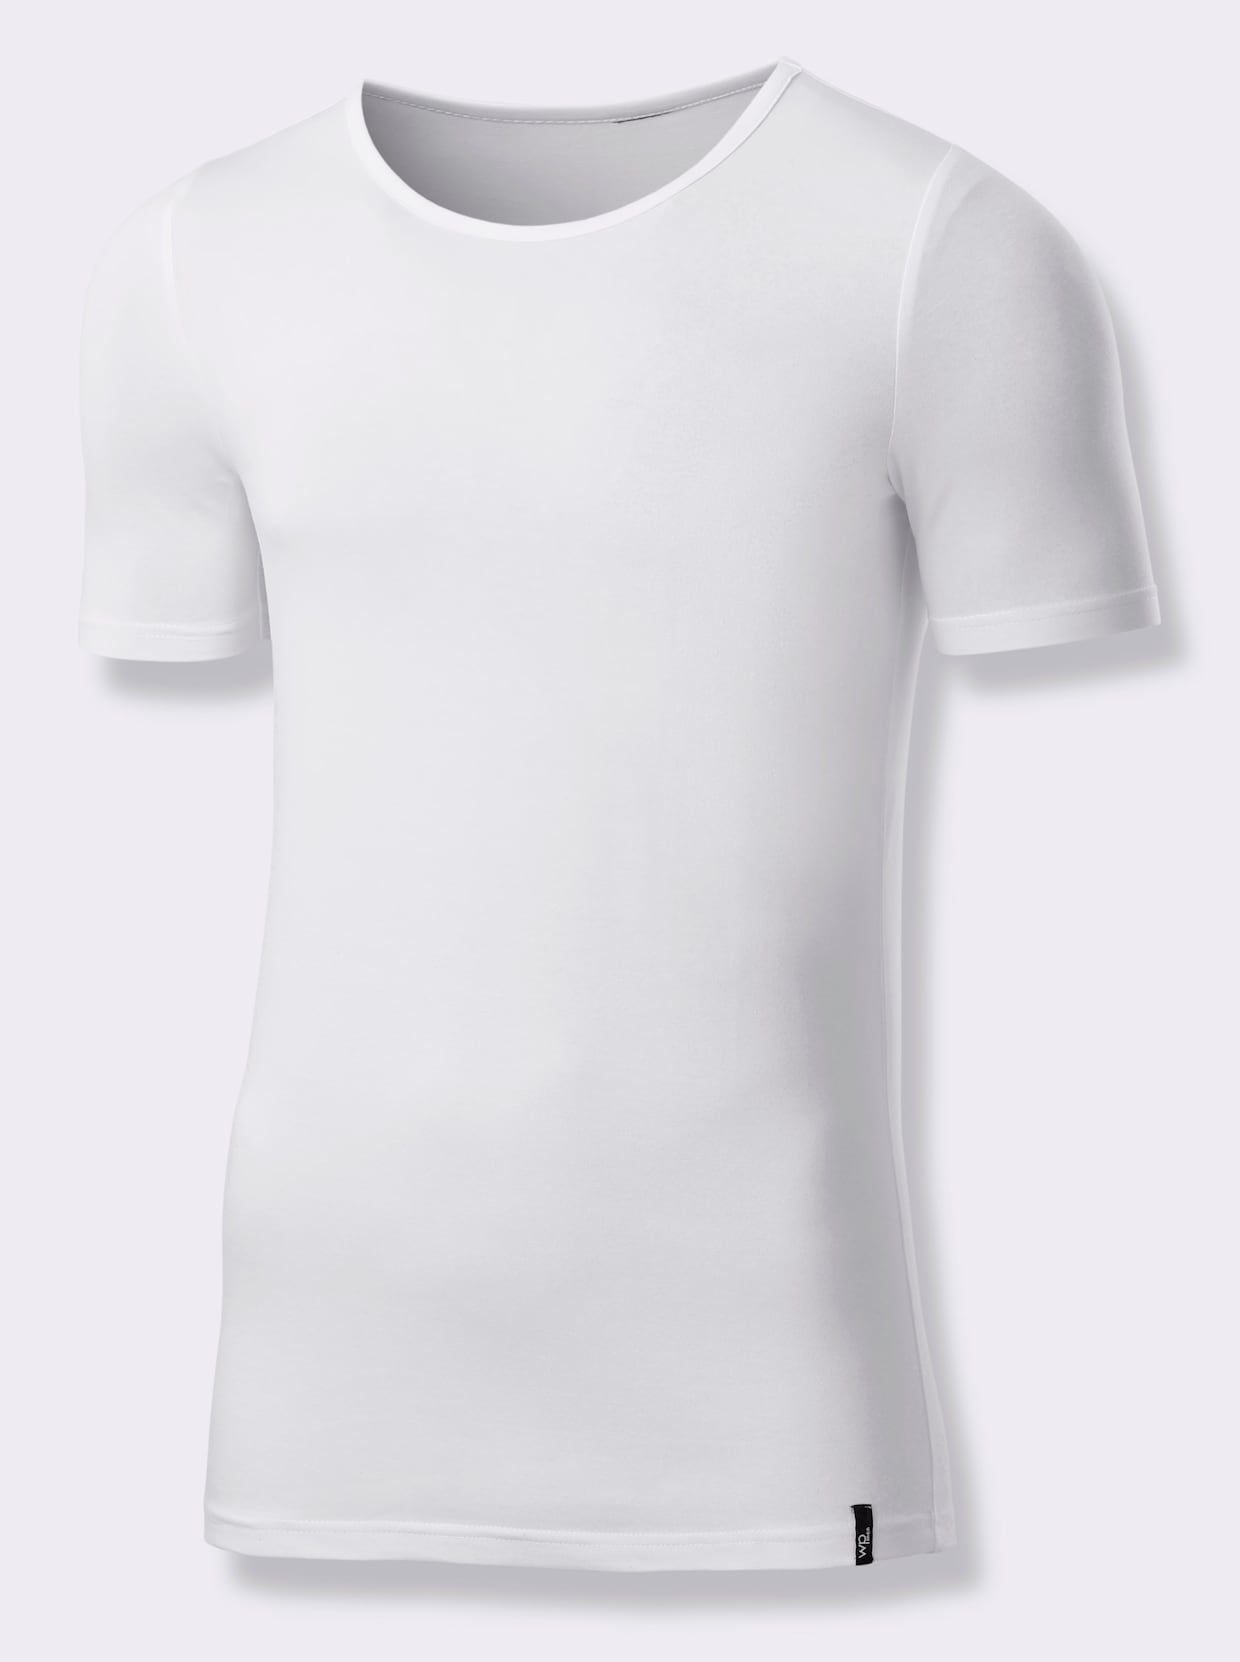 wäschepur Shirt - weiss